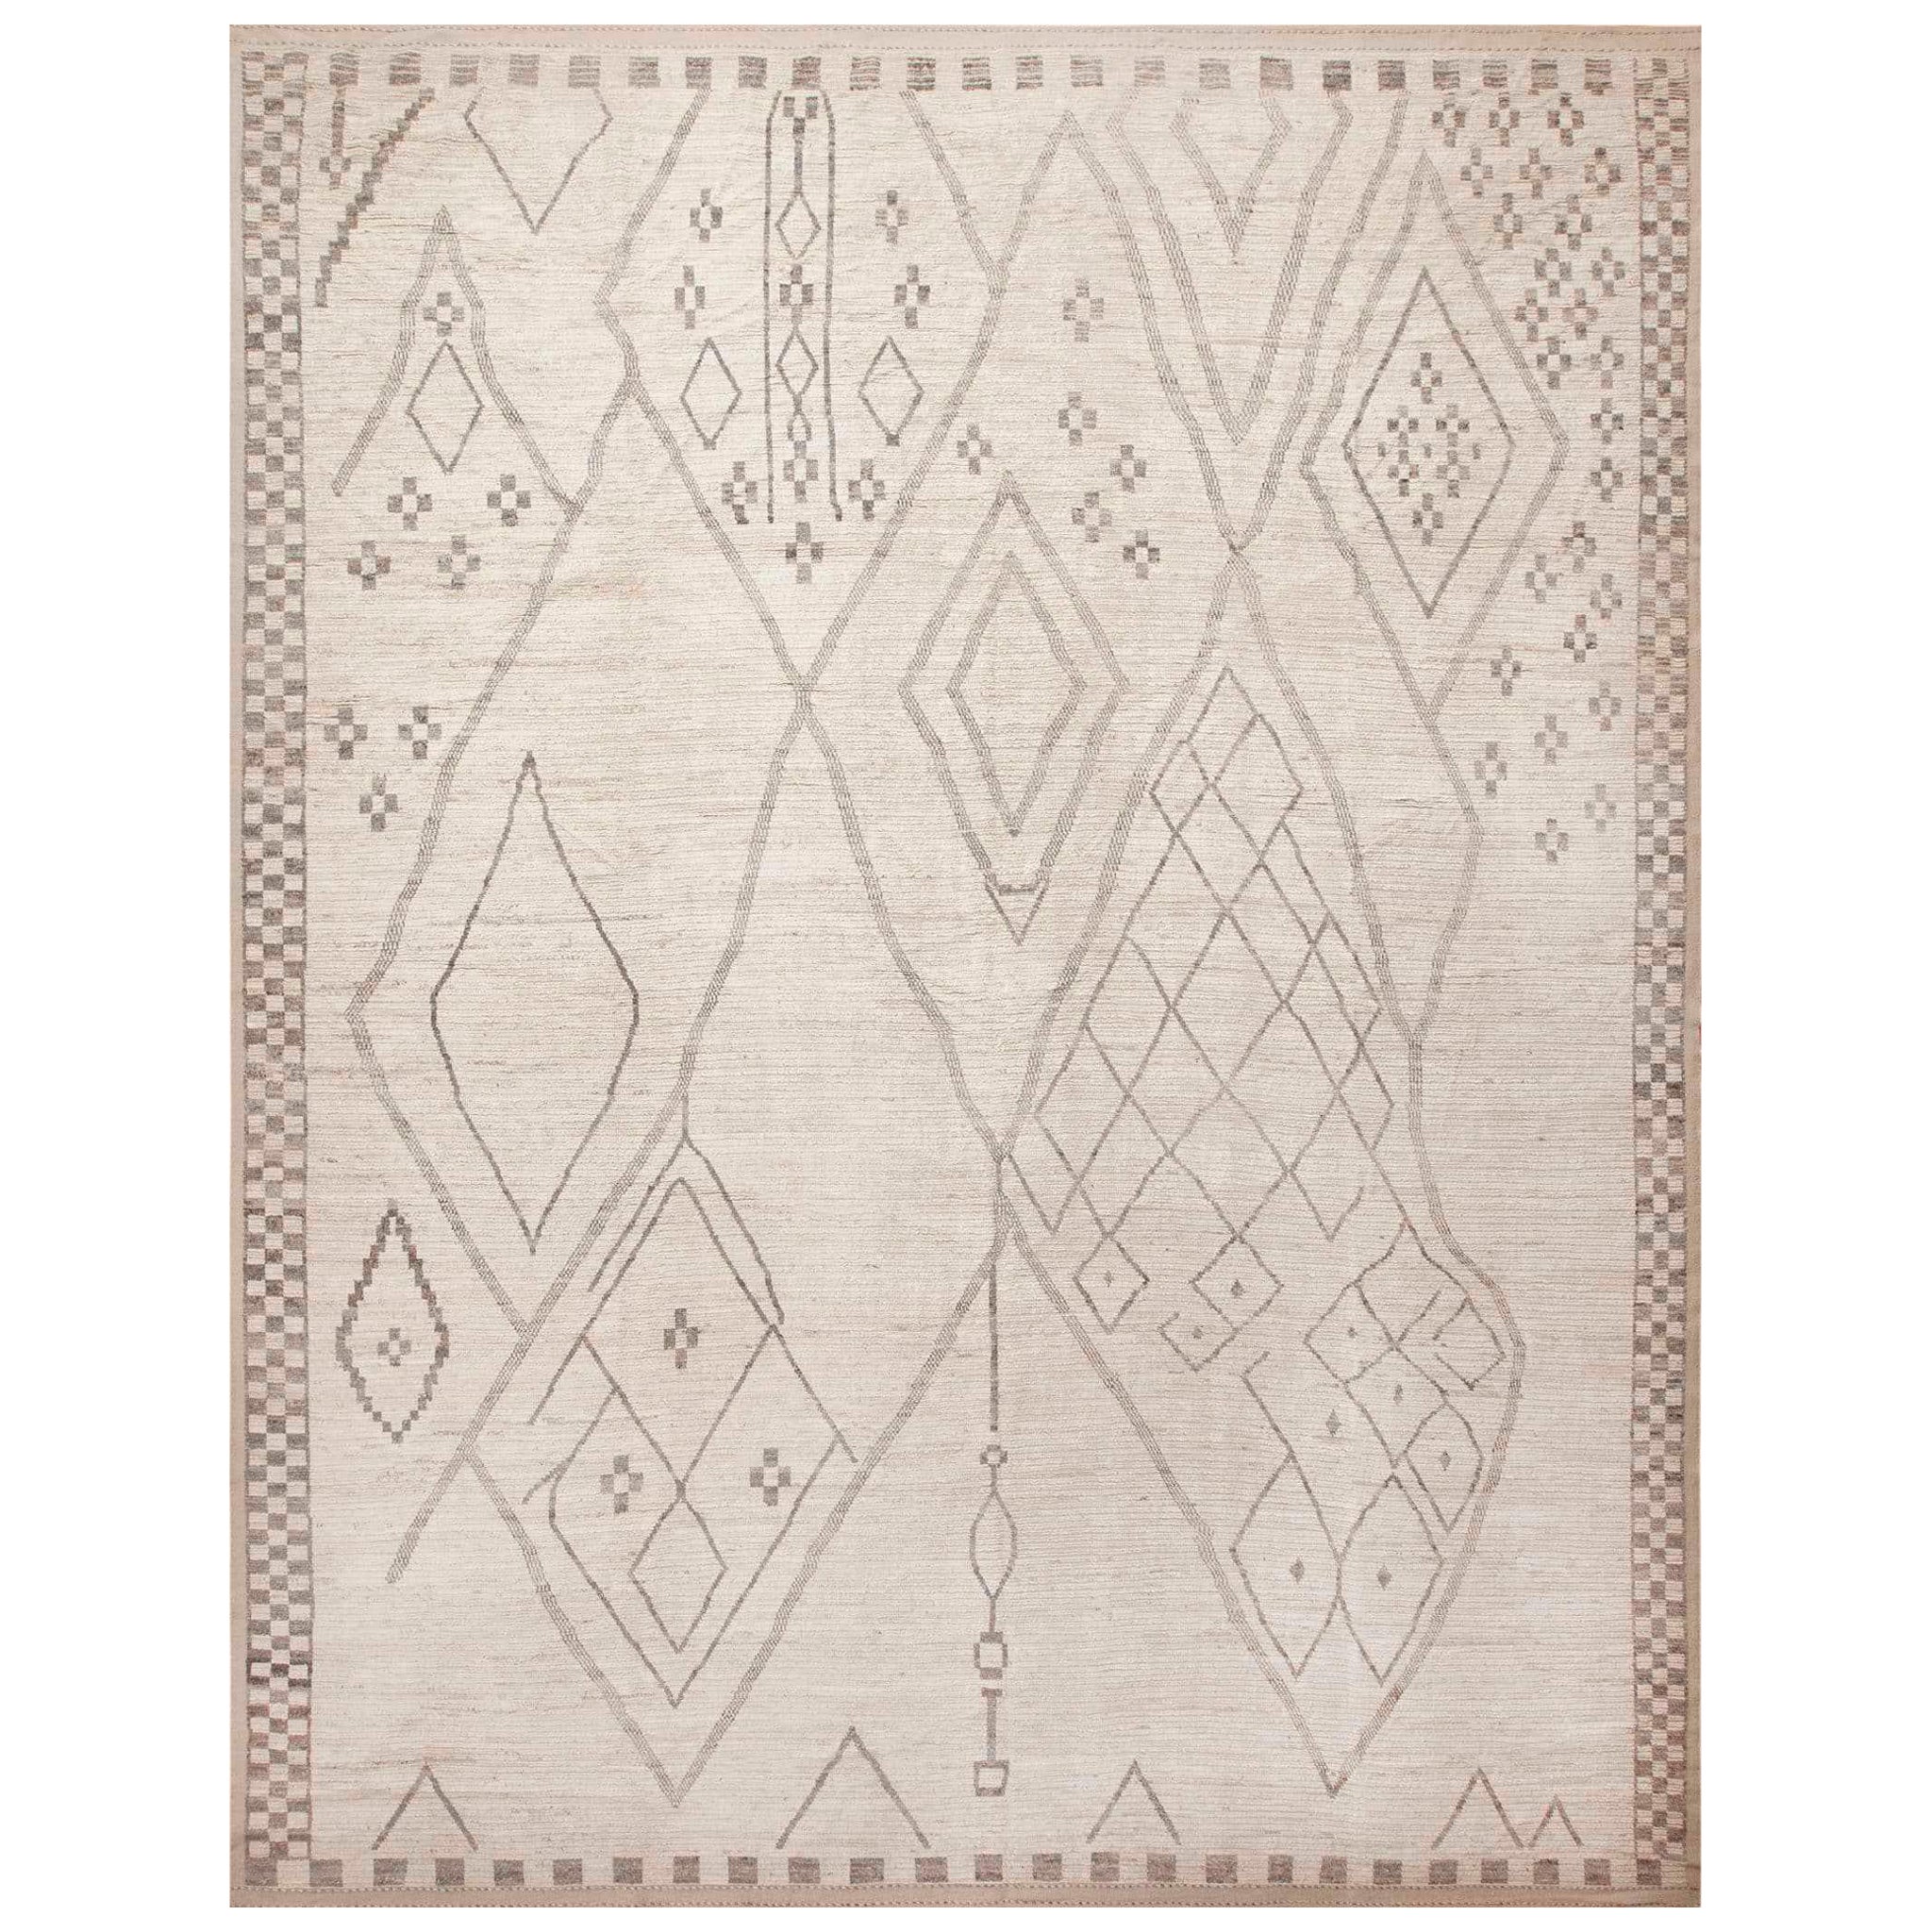 Nazmiyal Collection Tribal Berber Beni Ourain Design Modern Rug 13'2" x 17'1" For Sale